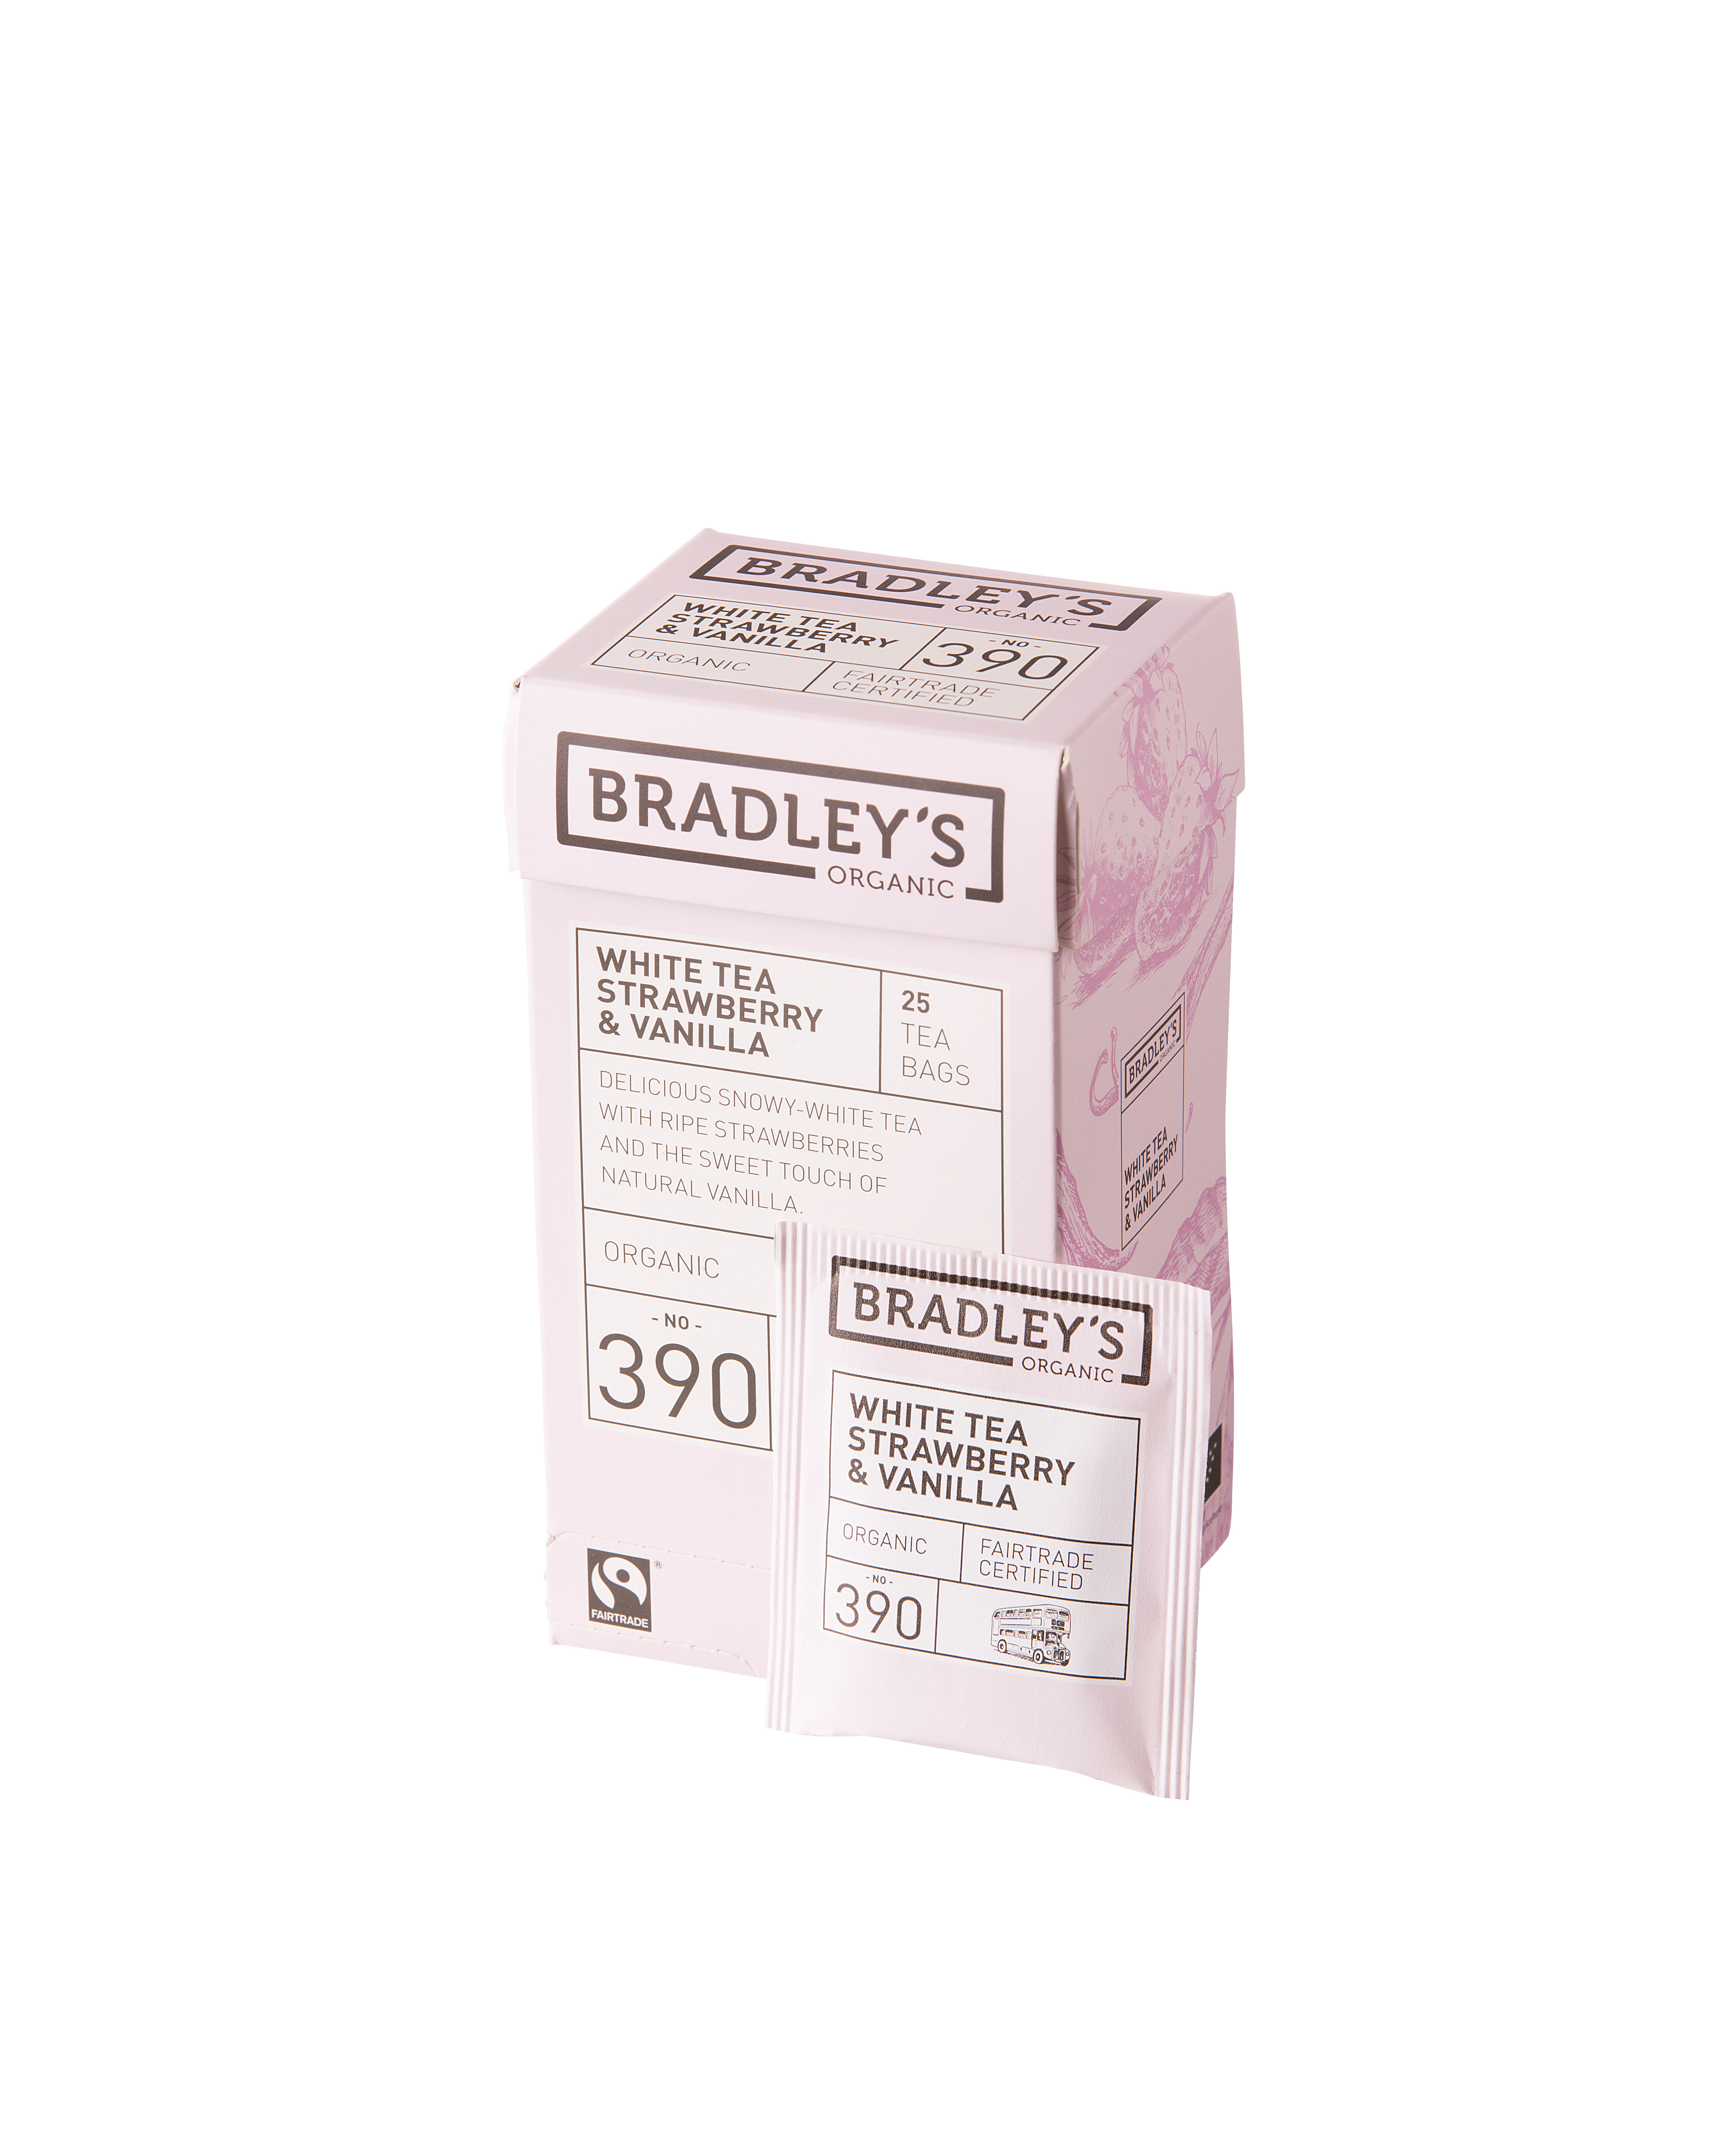 Bradley's Organic White Tea Strawberry & Vanilla